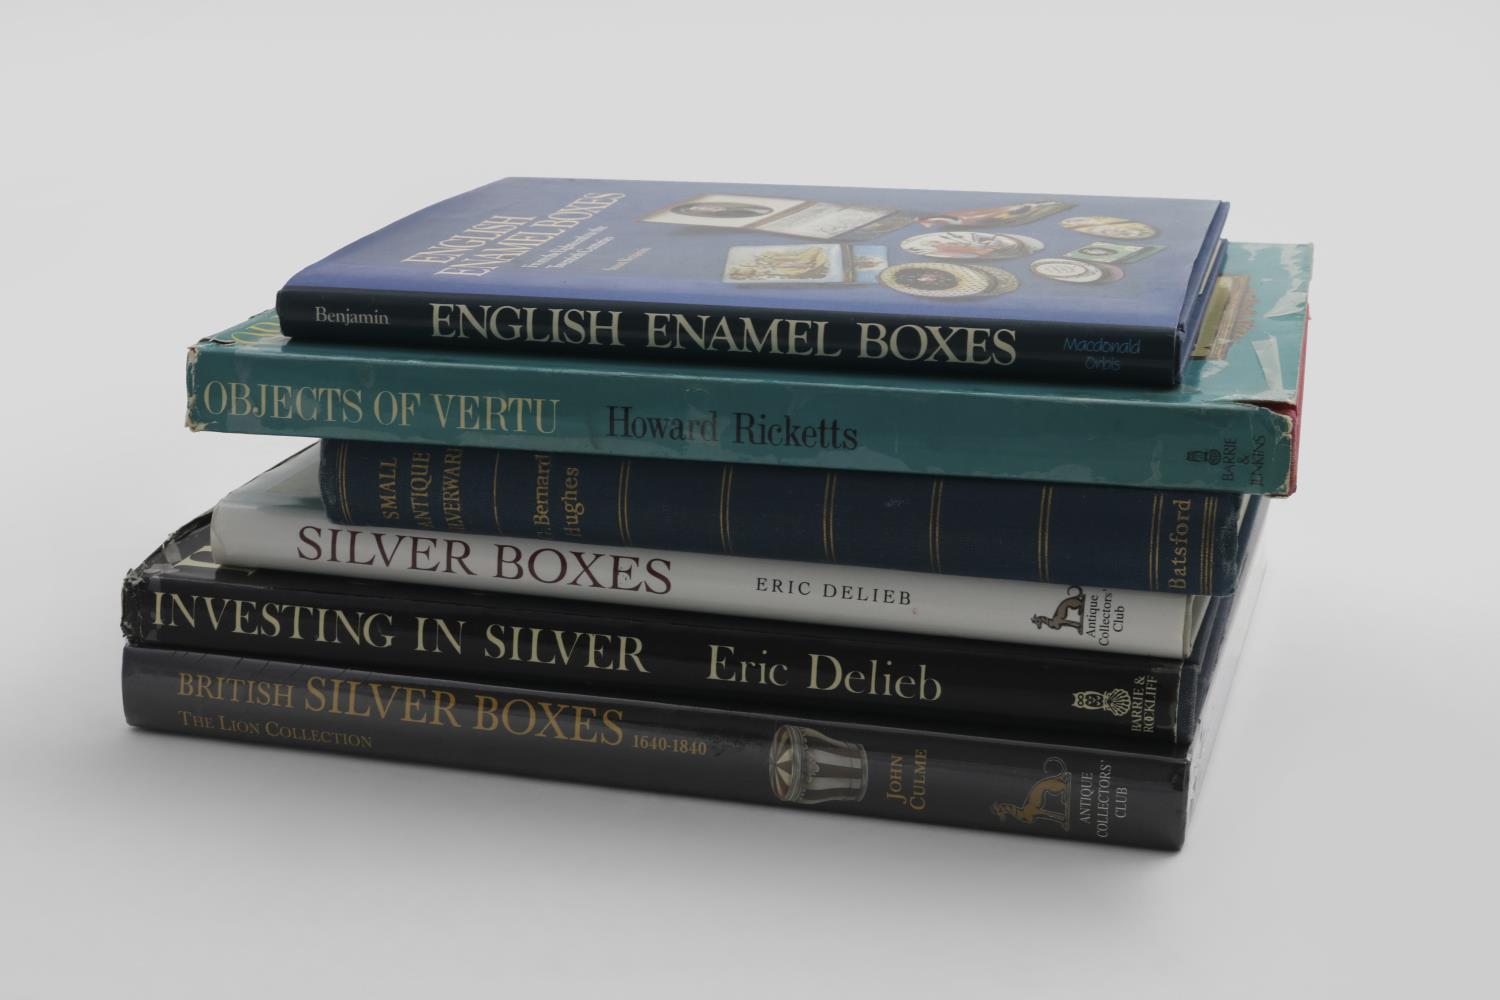 Delieb, E: Investing in Silver, 1968 and silver Boxes, 2002, Hughes, G.B: Small Antique